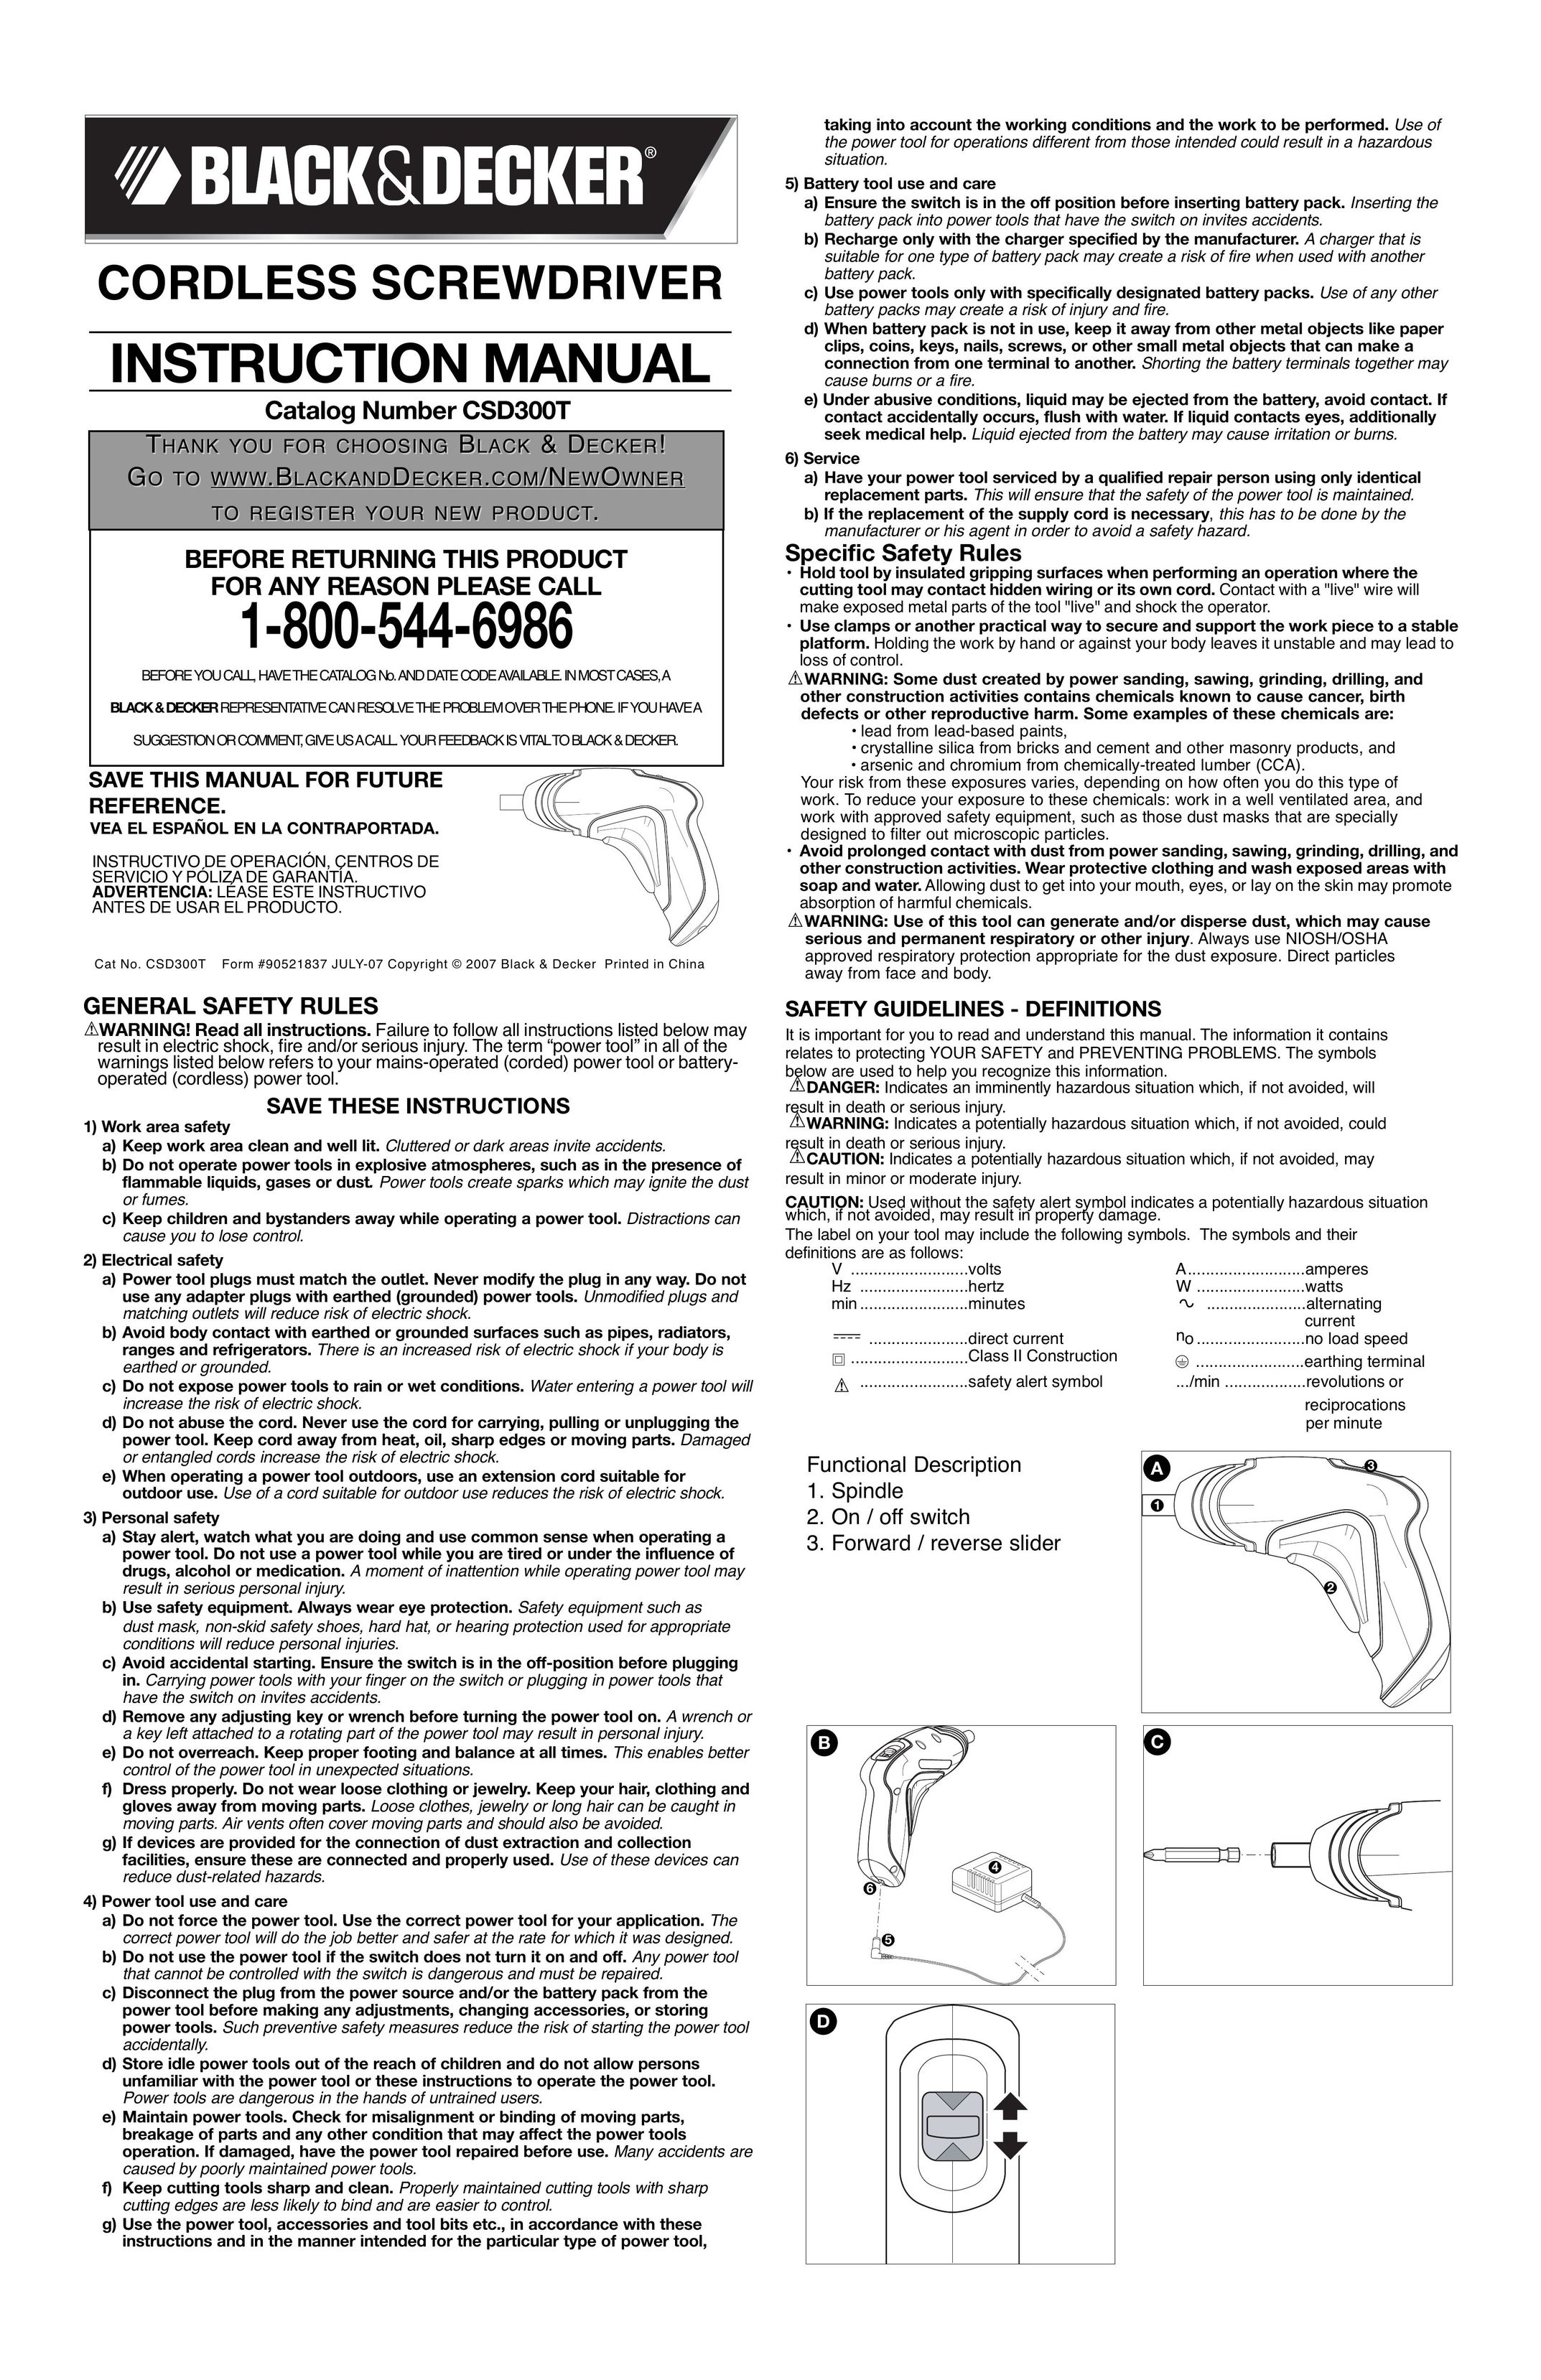 Black & Decker 90521837 Power Screwdriver User Manual